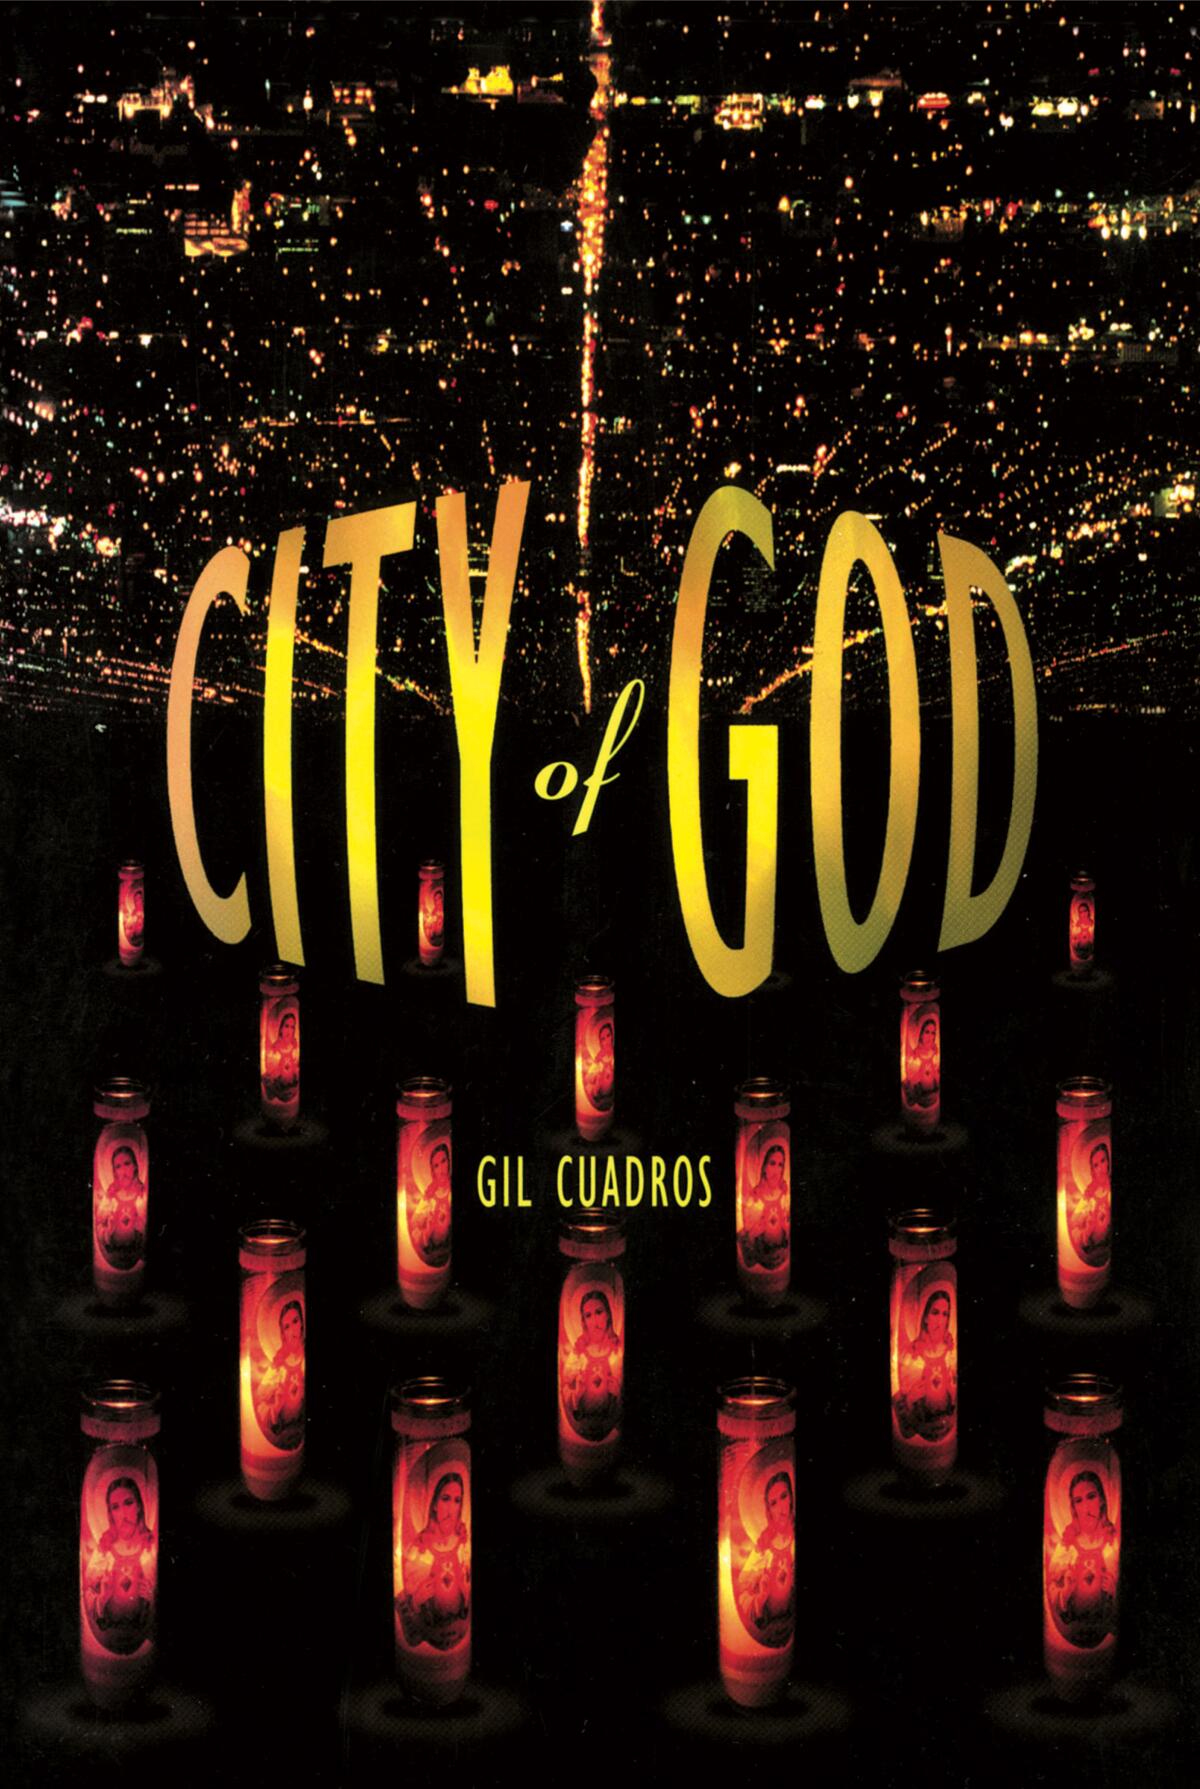 "City of God" by Gil Cuadros